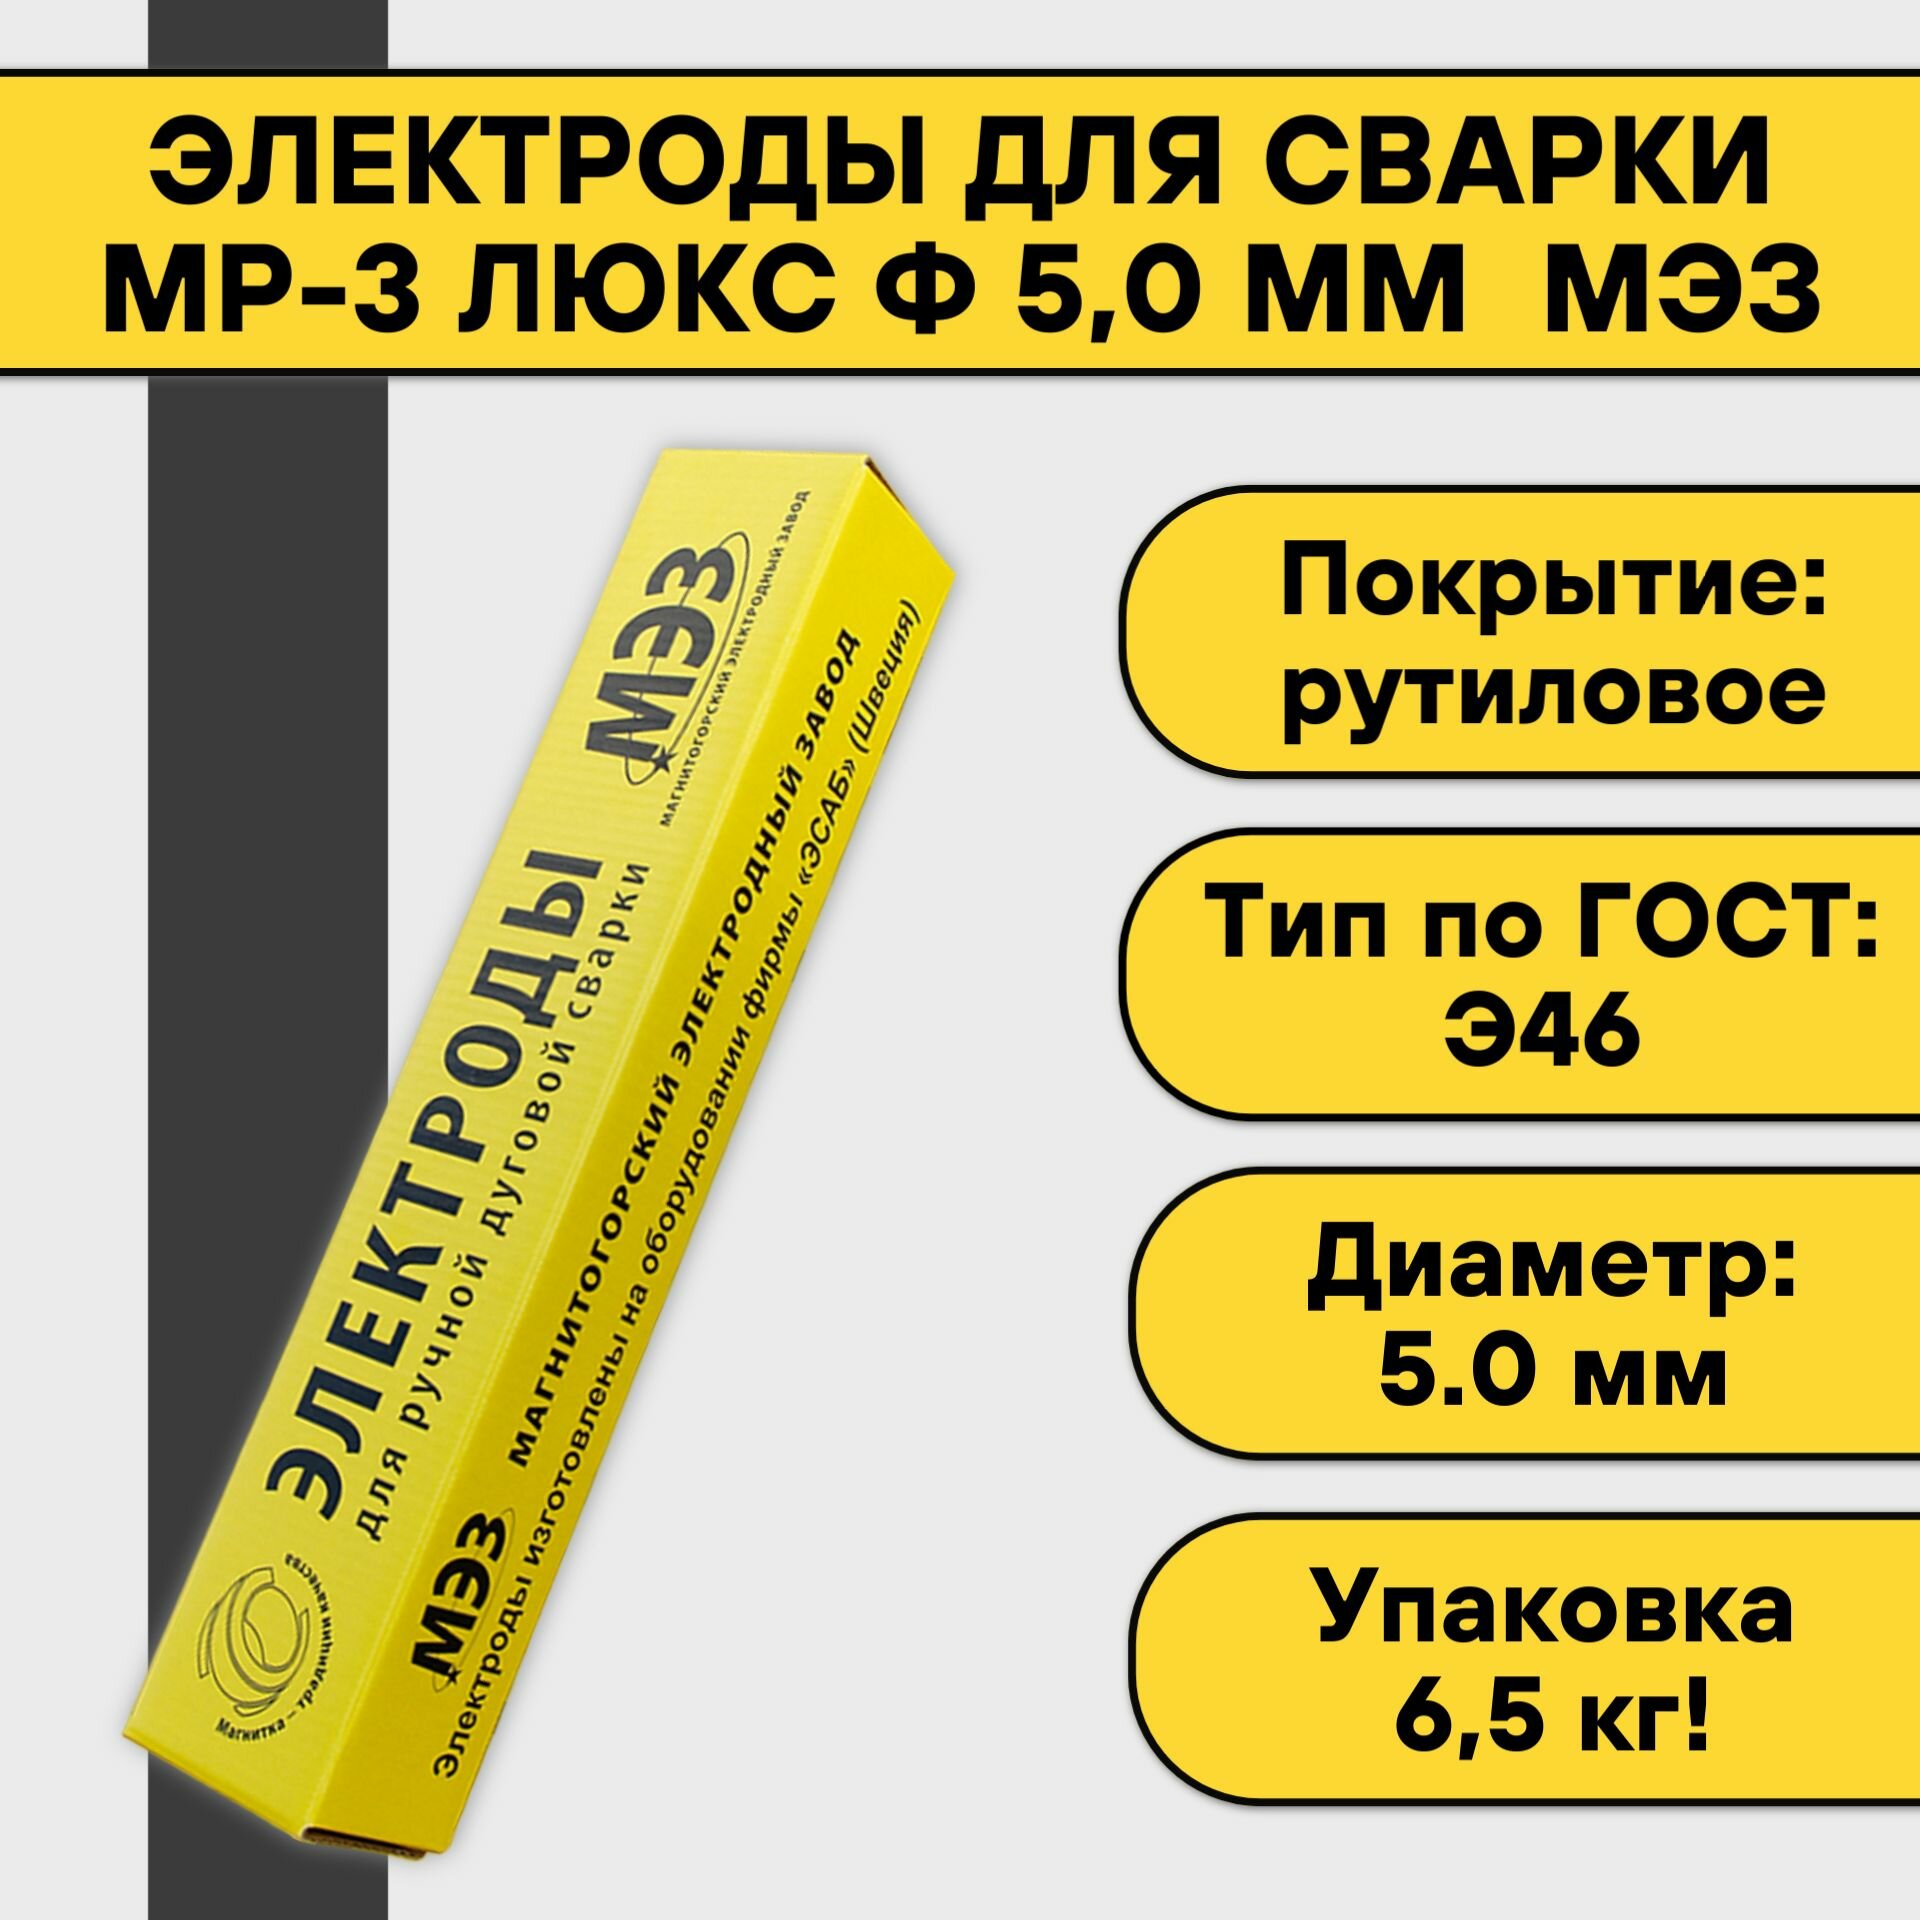 Электроды для сварки МР-3 Люкс ф 5,0 мм (6,5 кг) МЭЗ